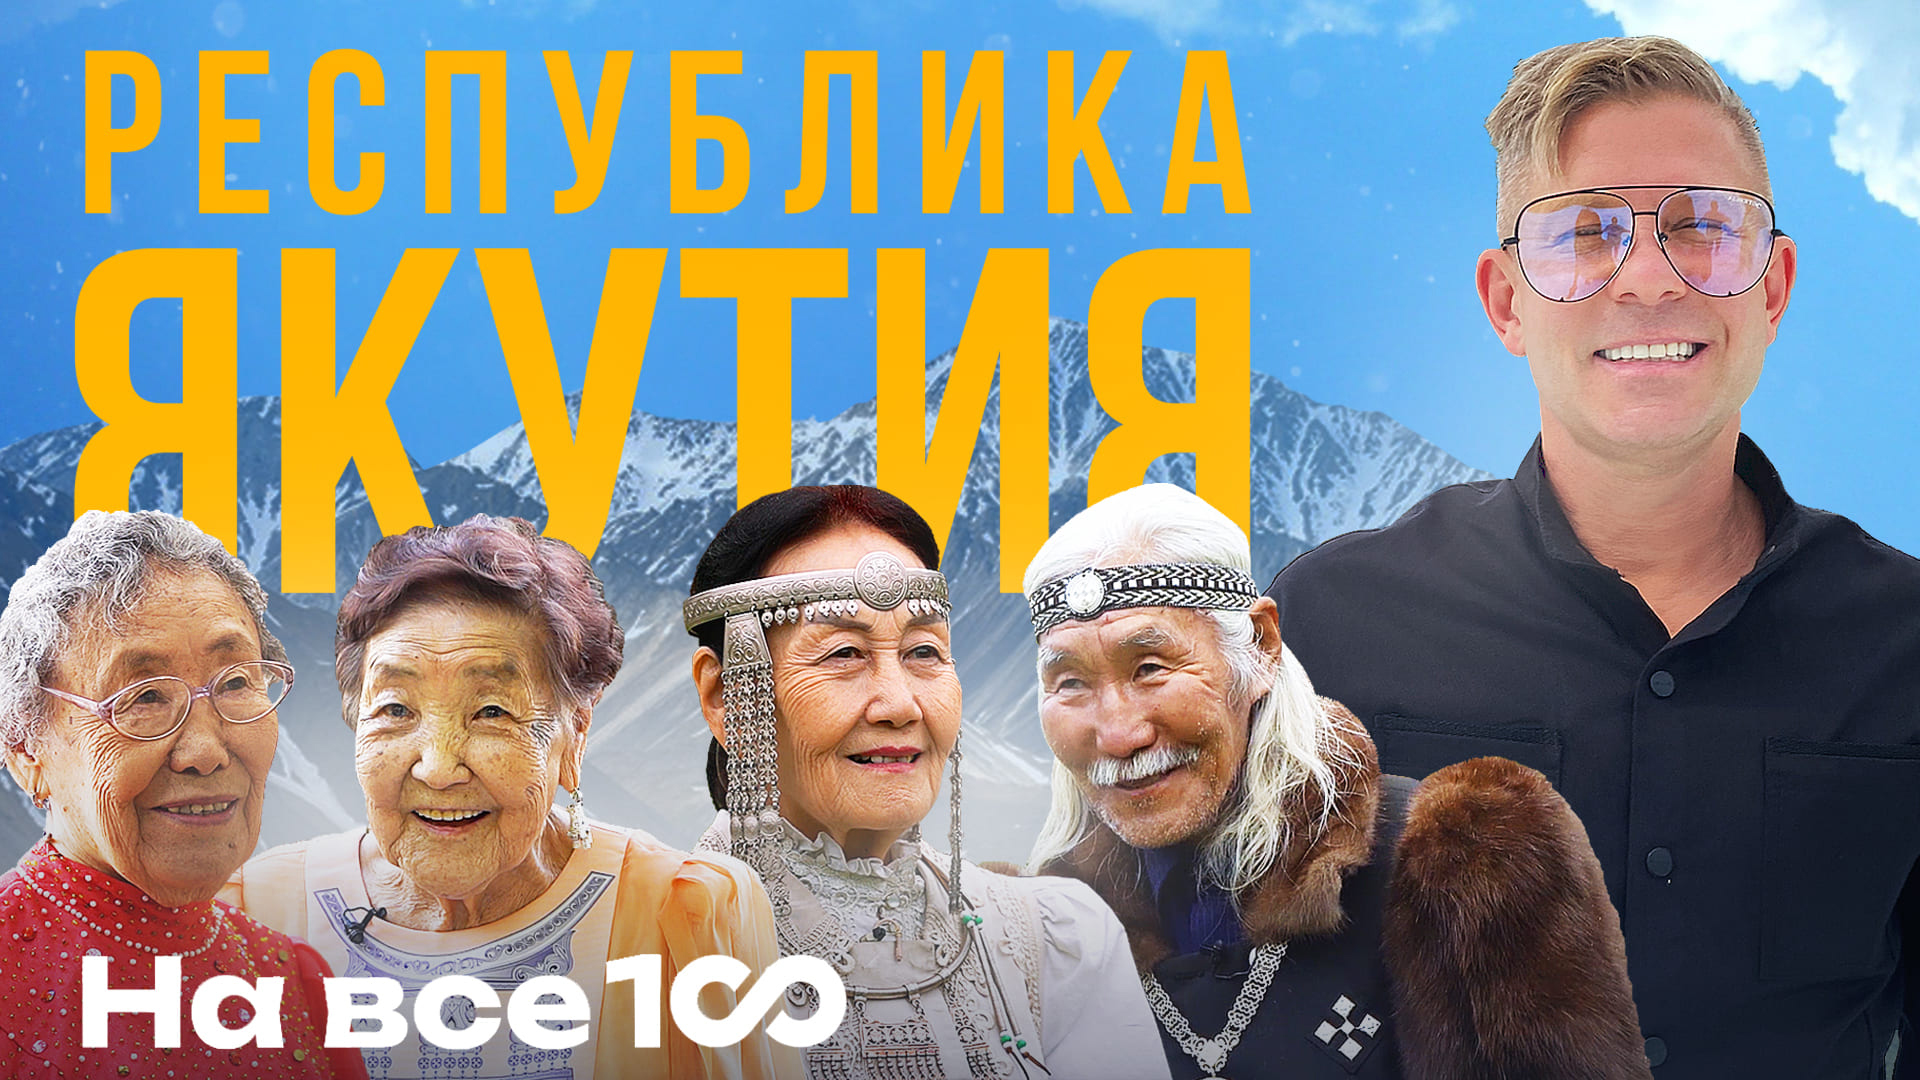 На все 100 - Почему в Якутии живут долго - Митя Фомин